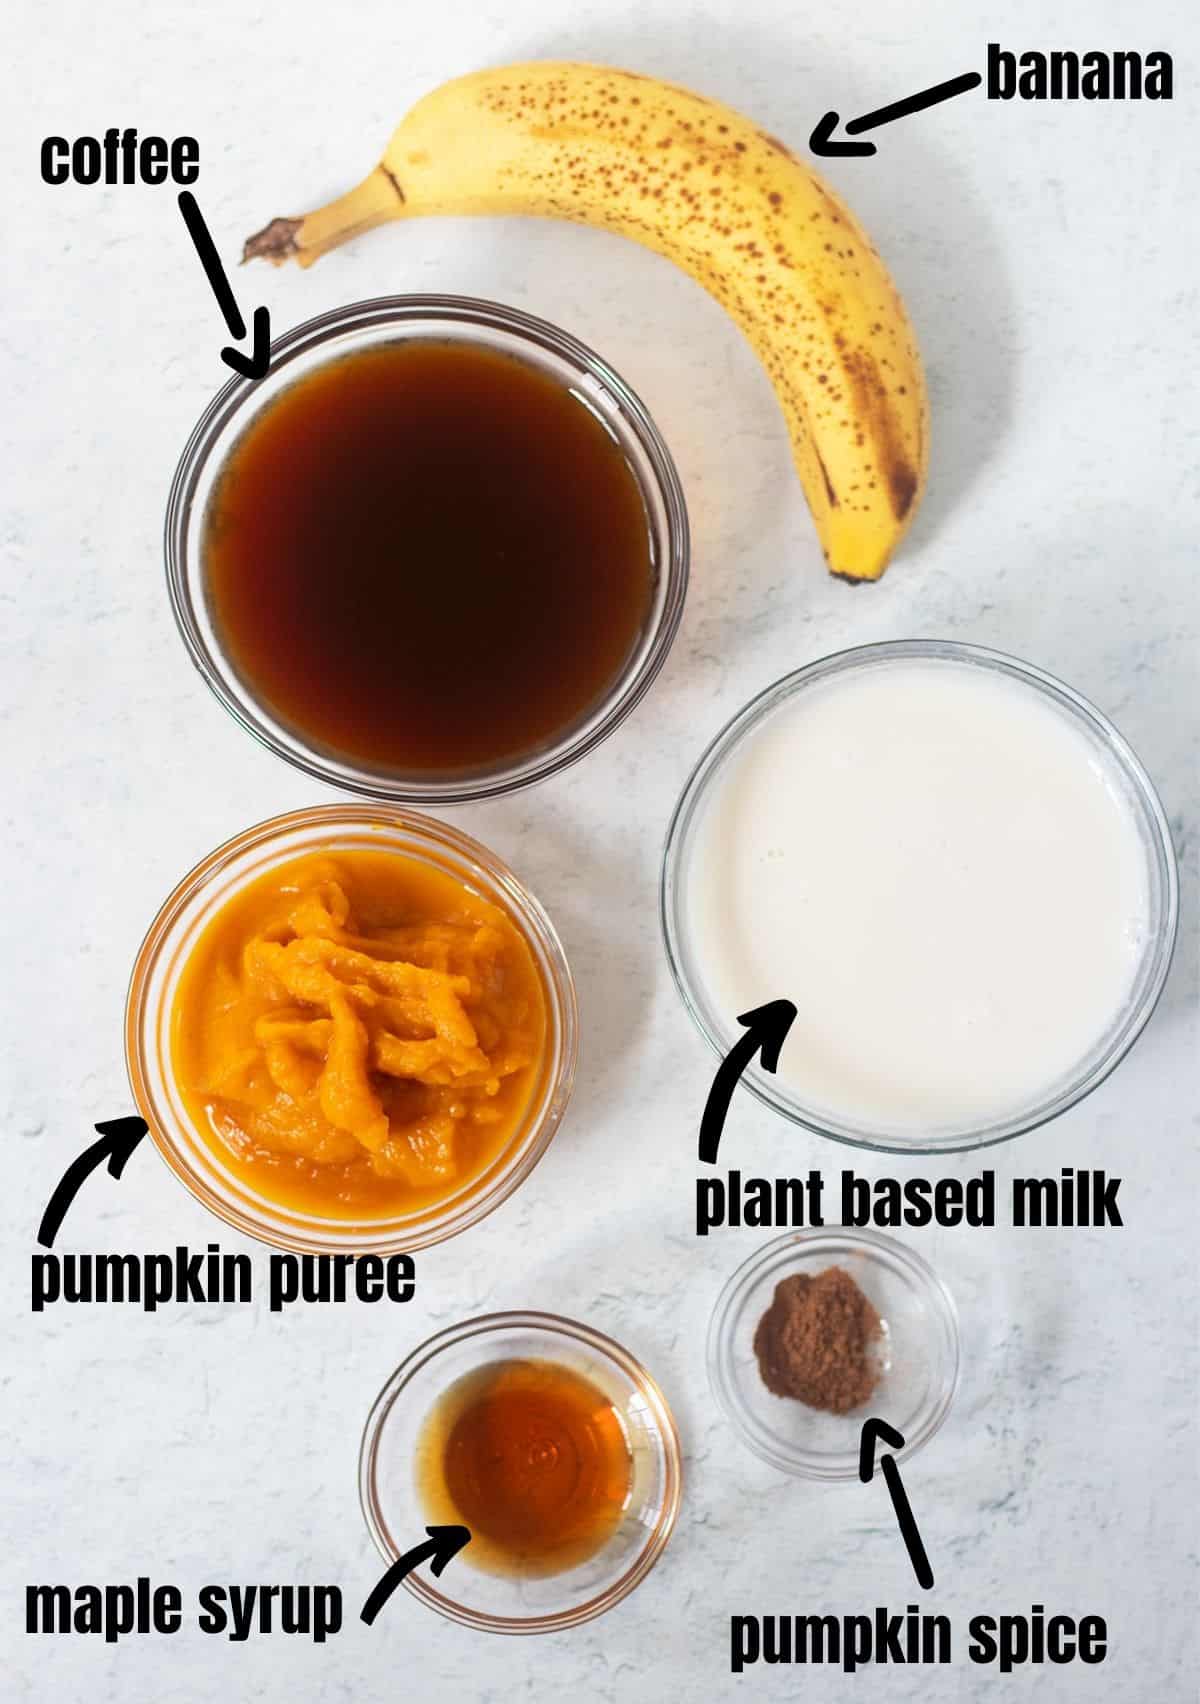 coffee, banana, pumpkin puree, plant based milk, maple syrup, pumpkin spice.